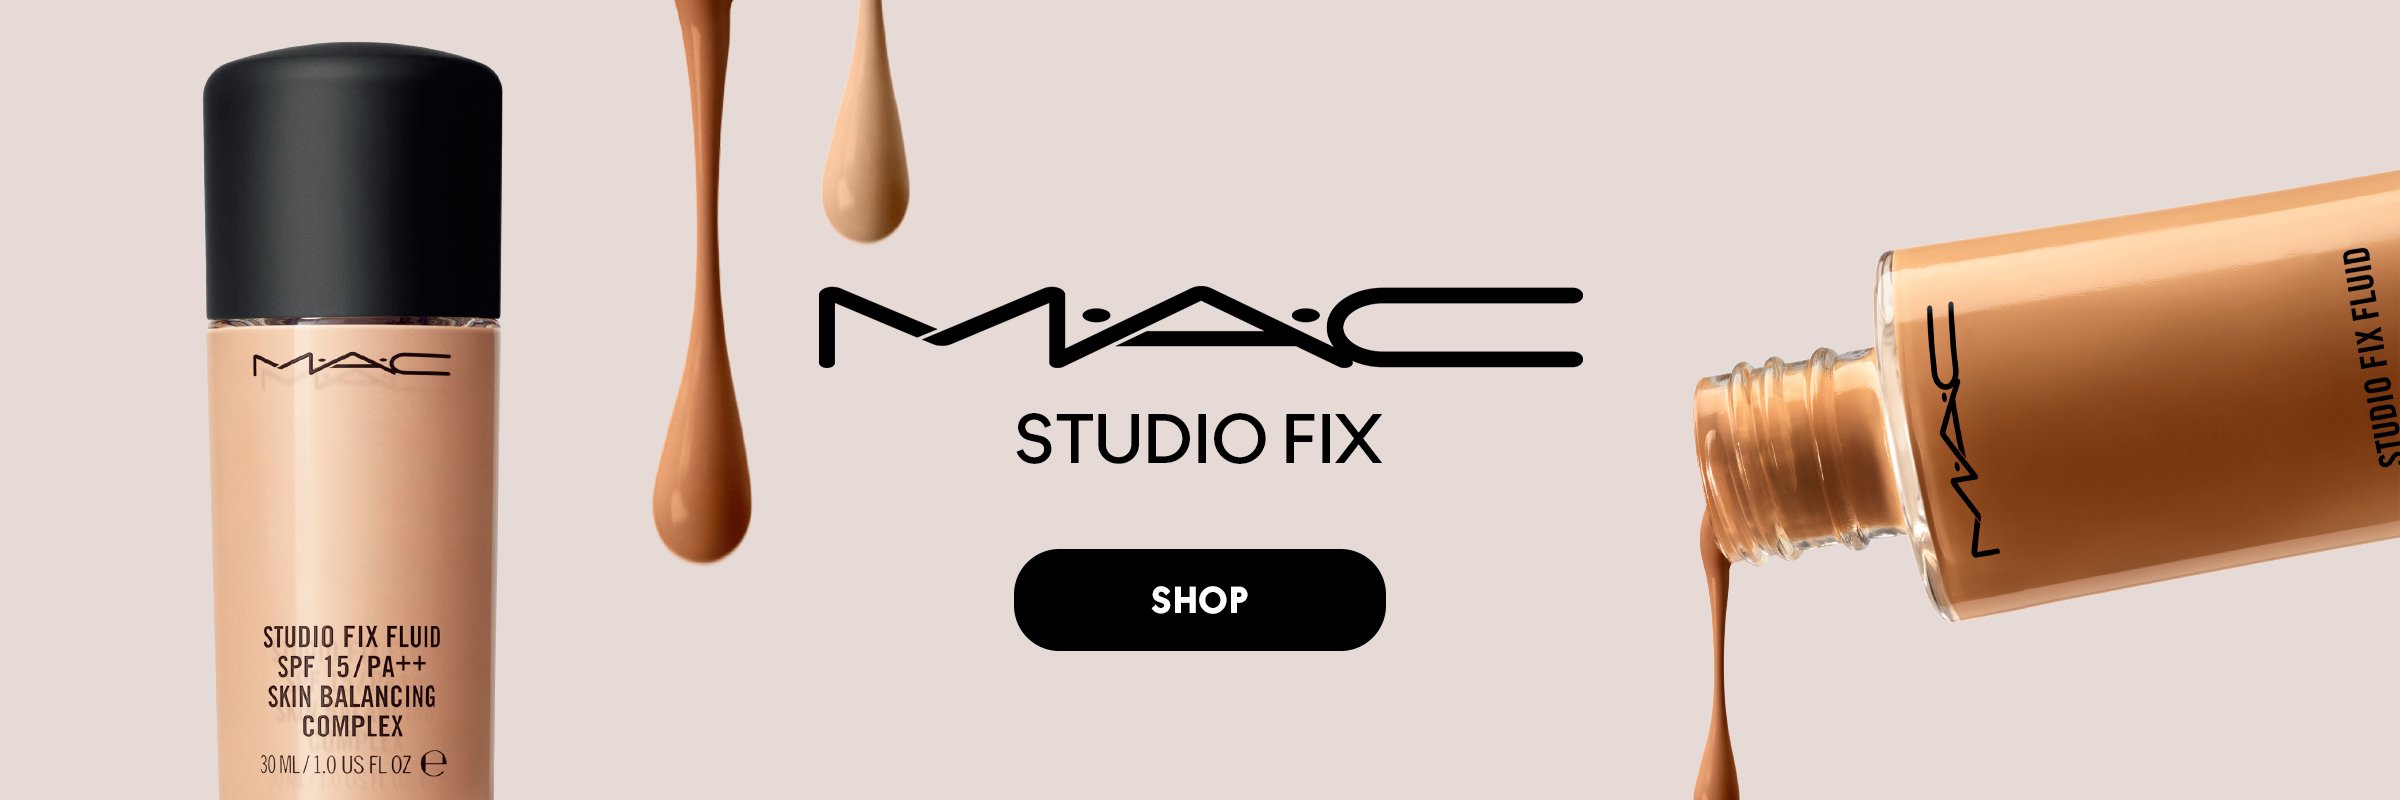 Mac - Studio Fix